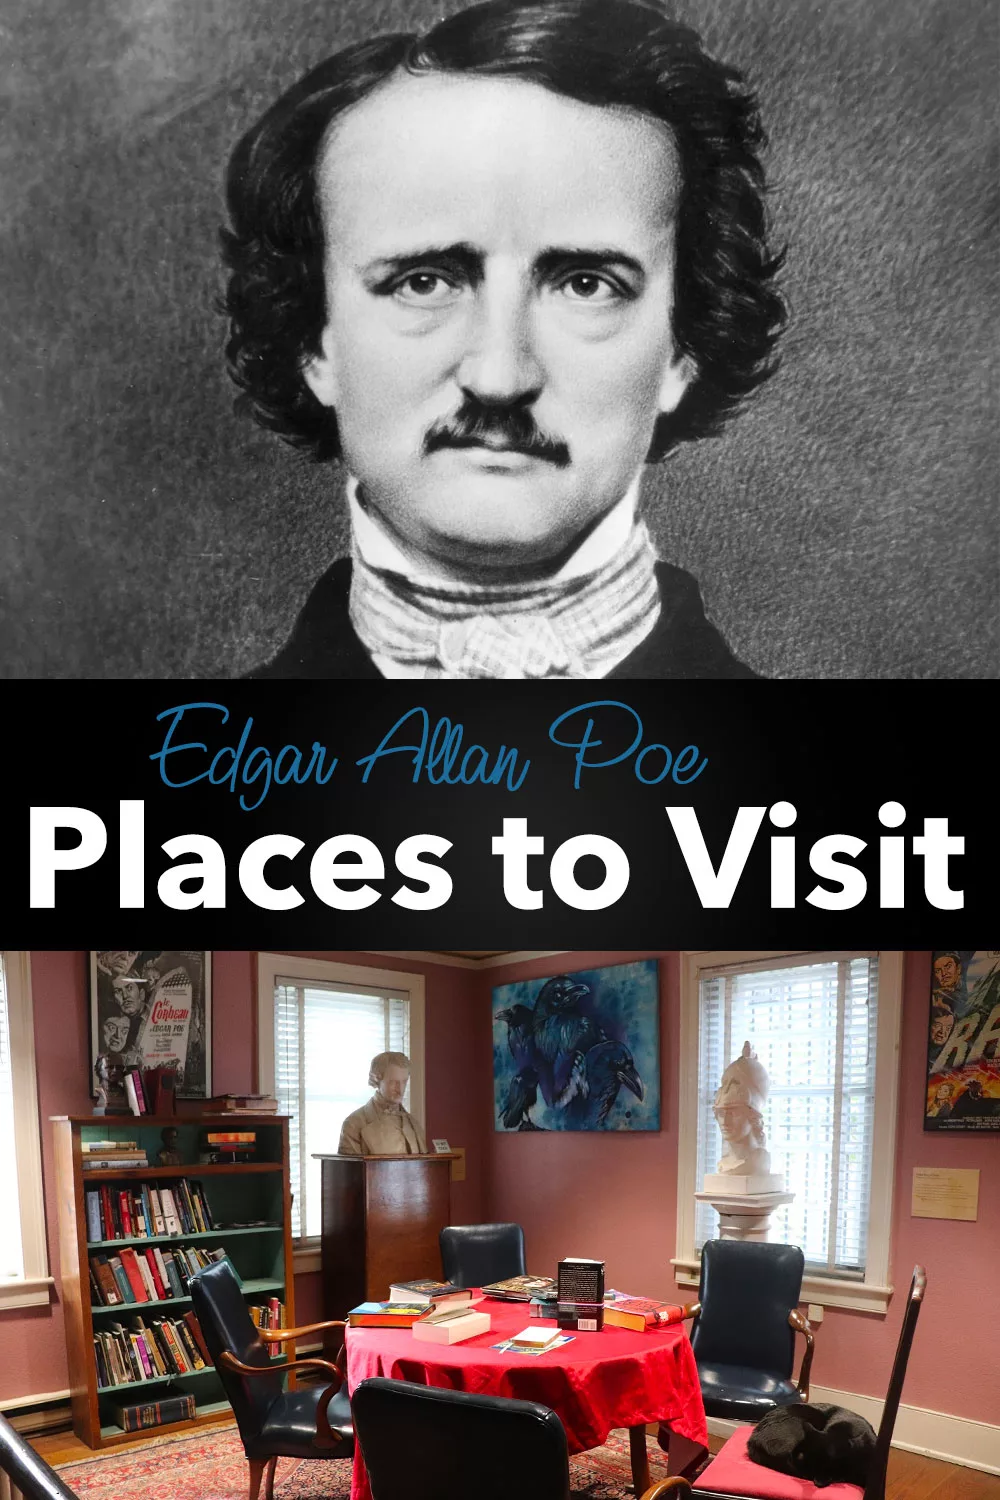 Edgar Allan Poe Places to Visit